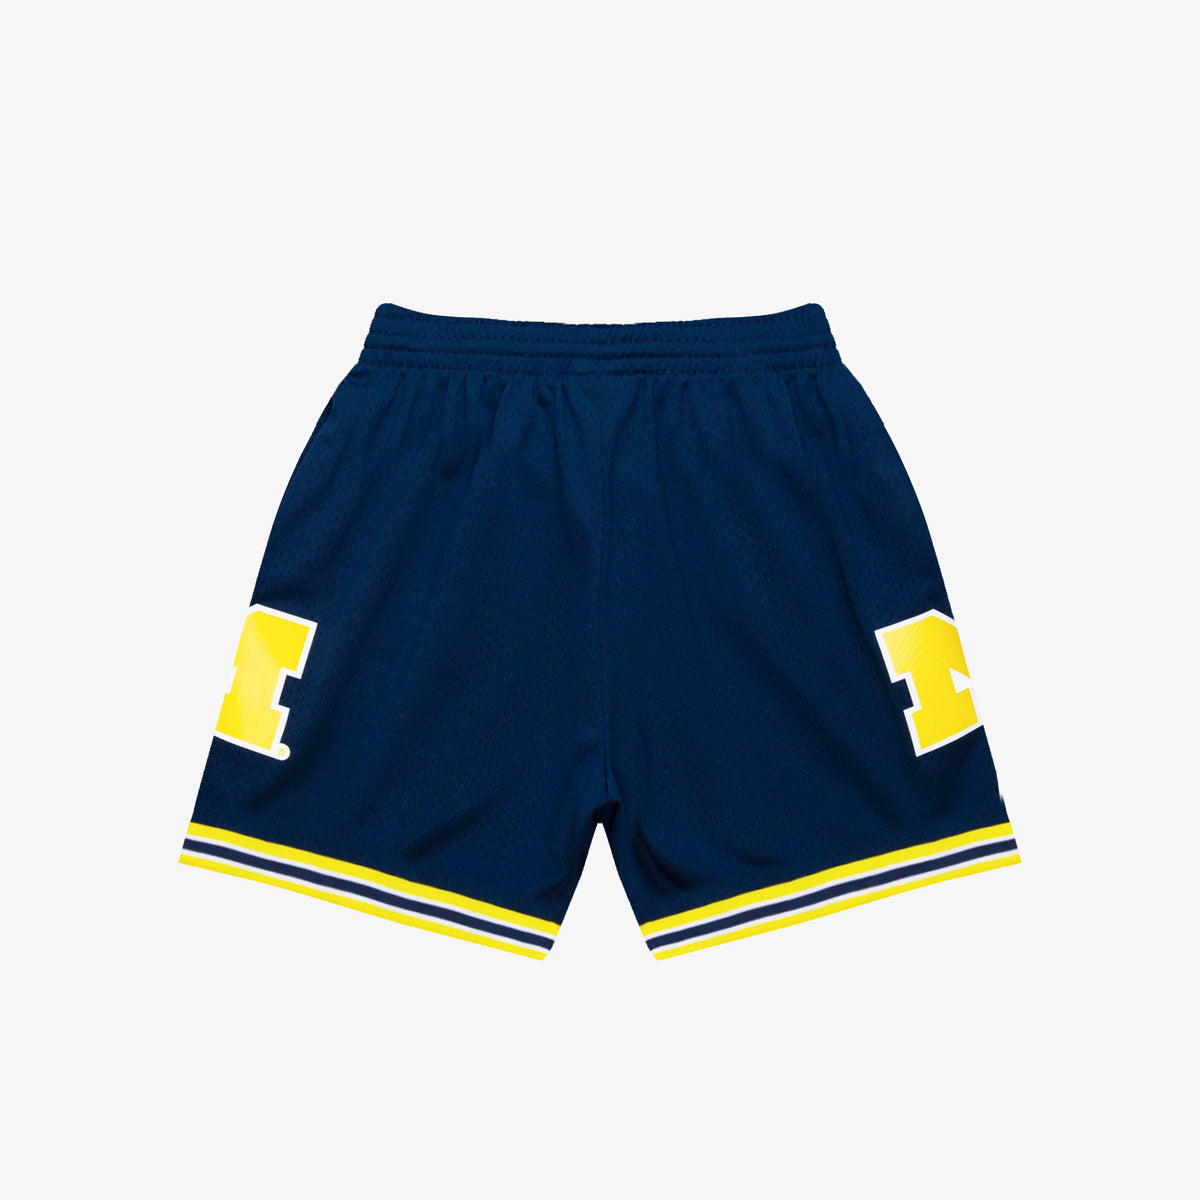 University of Michigan 91-92 HWC Swingman Shorts - Blue